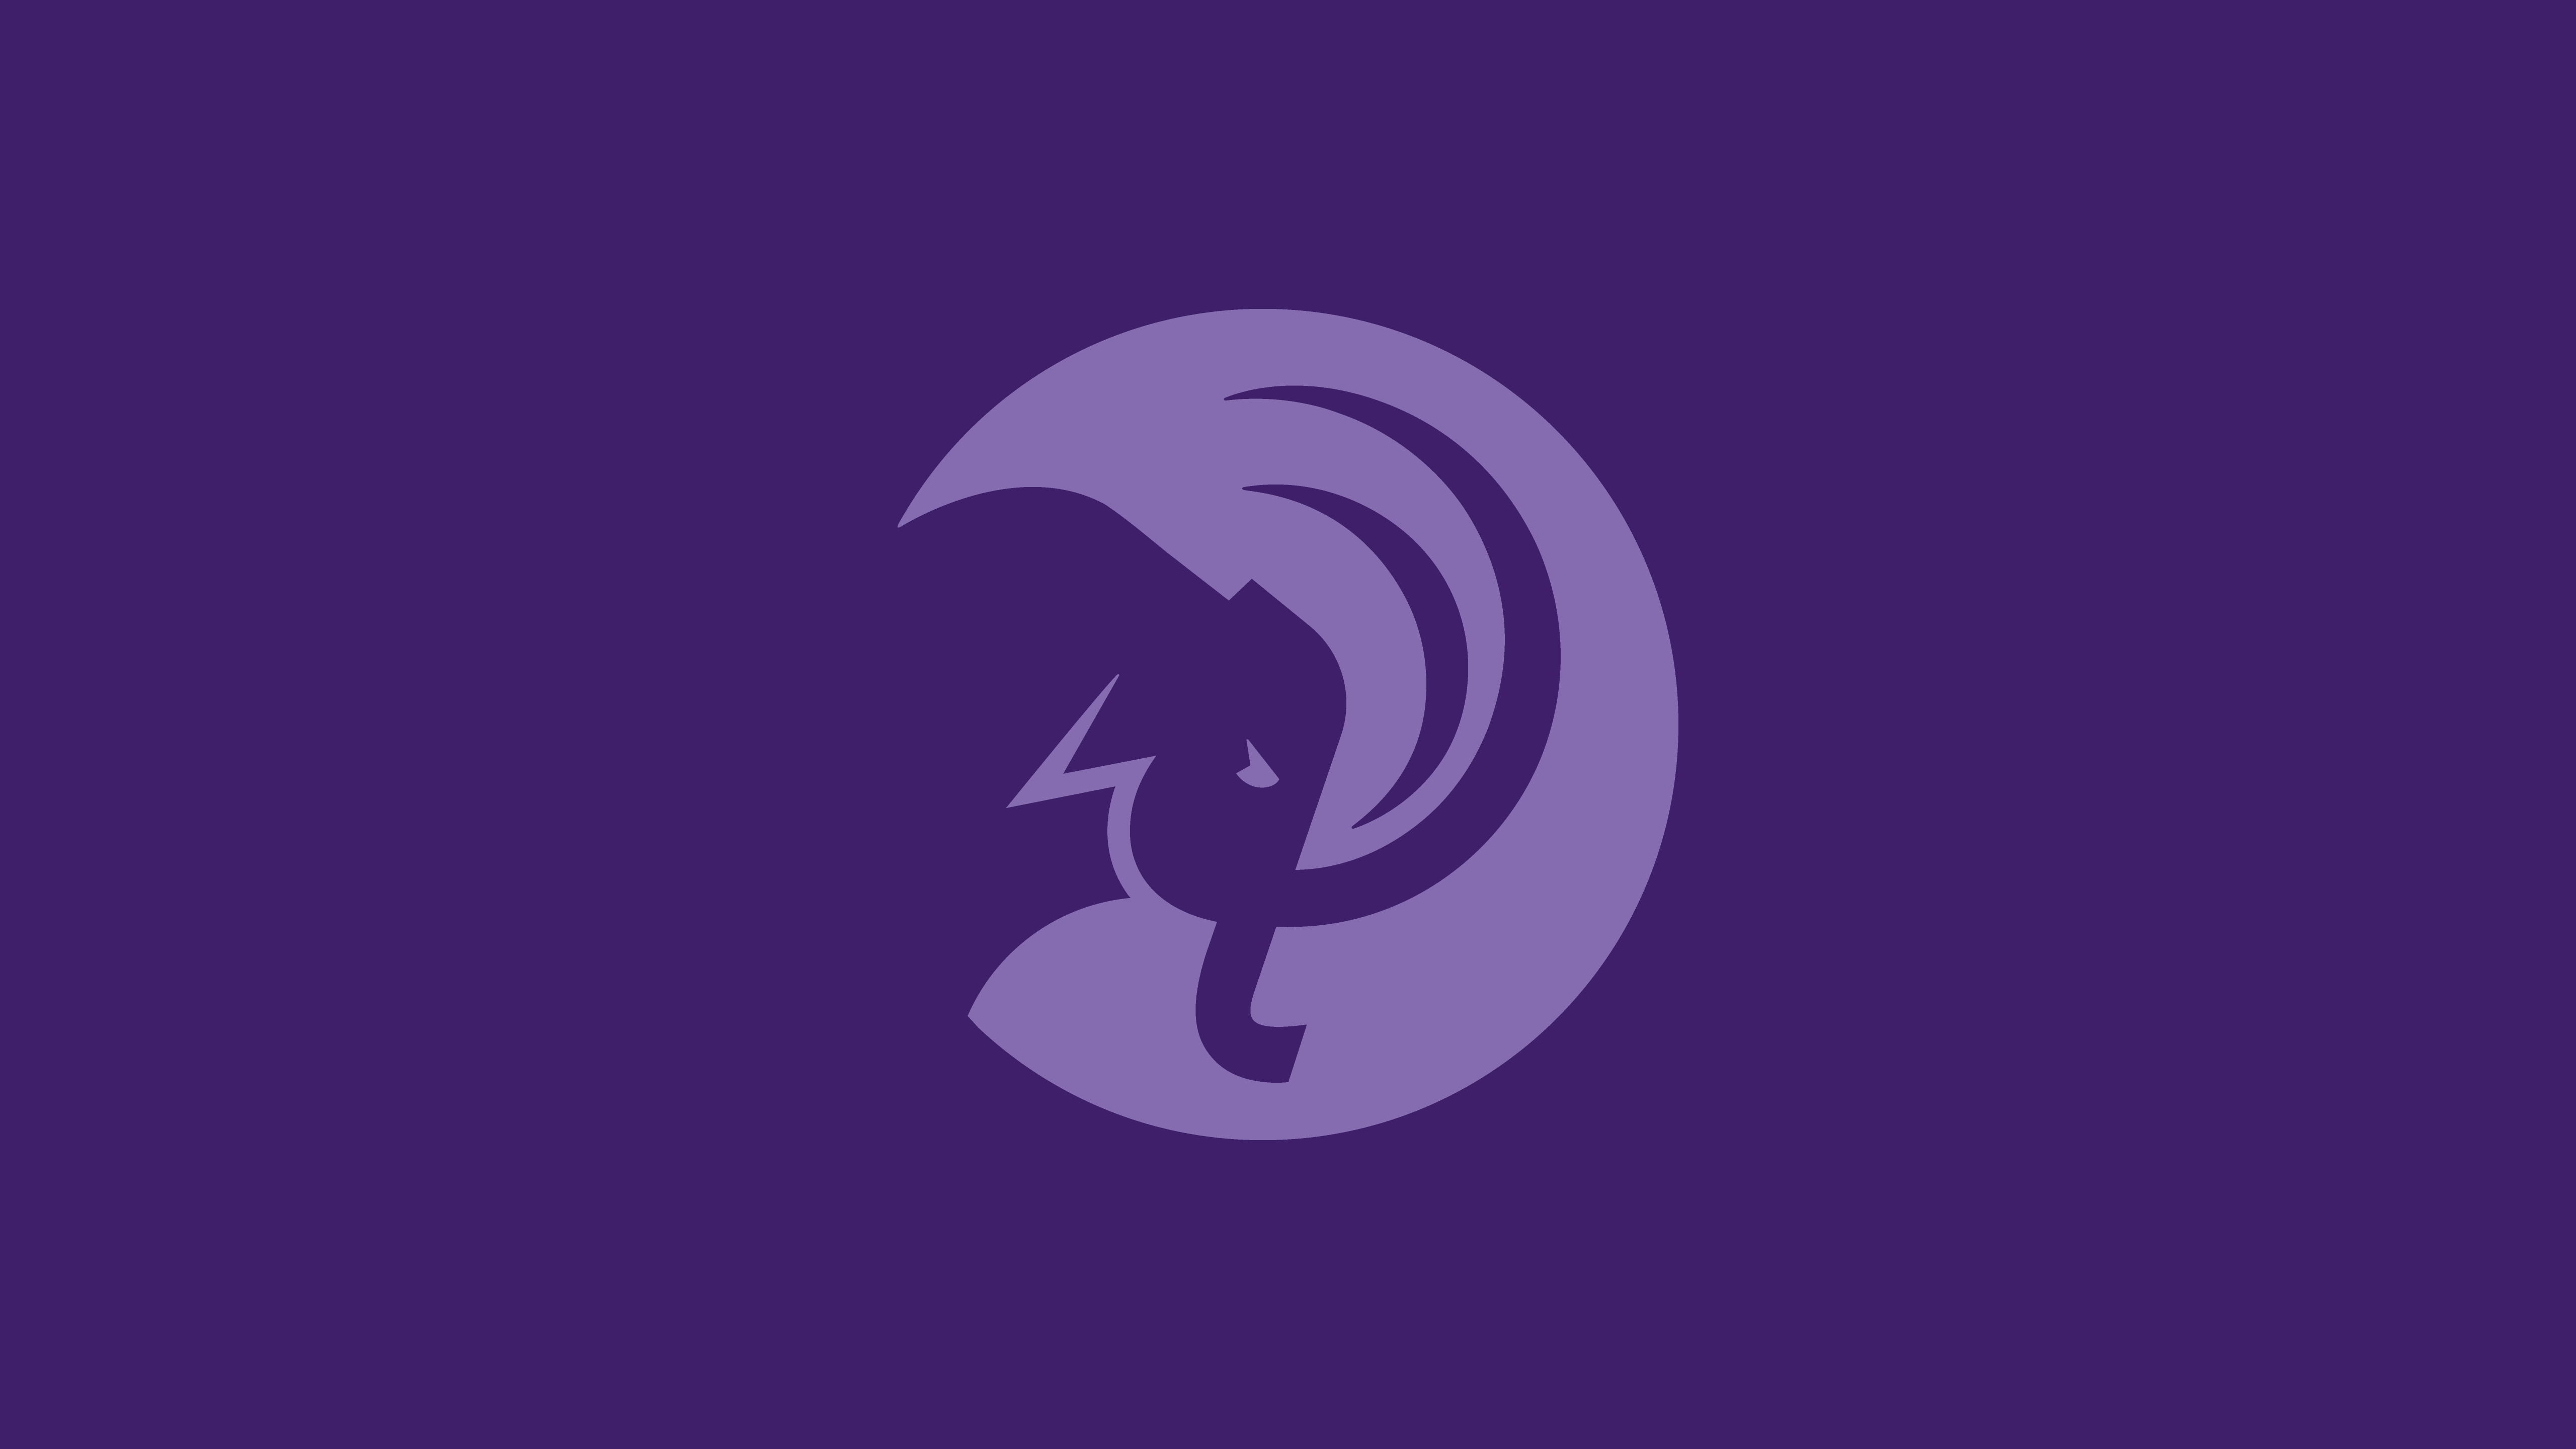 Light purple mammoth head circular logo on dark purple background